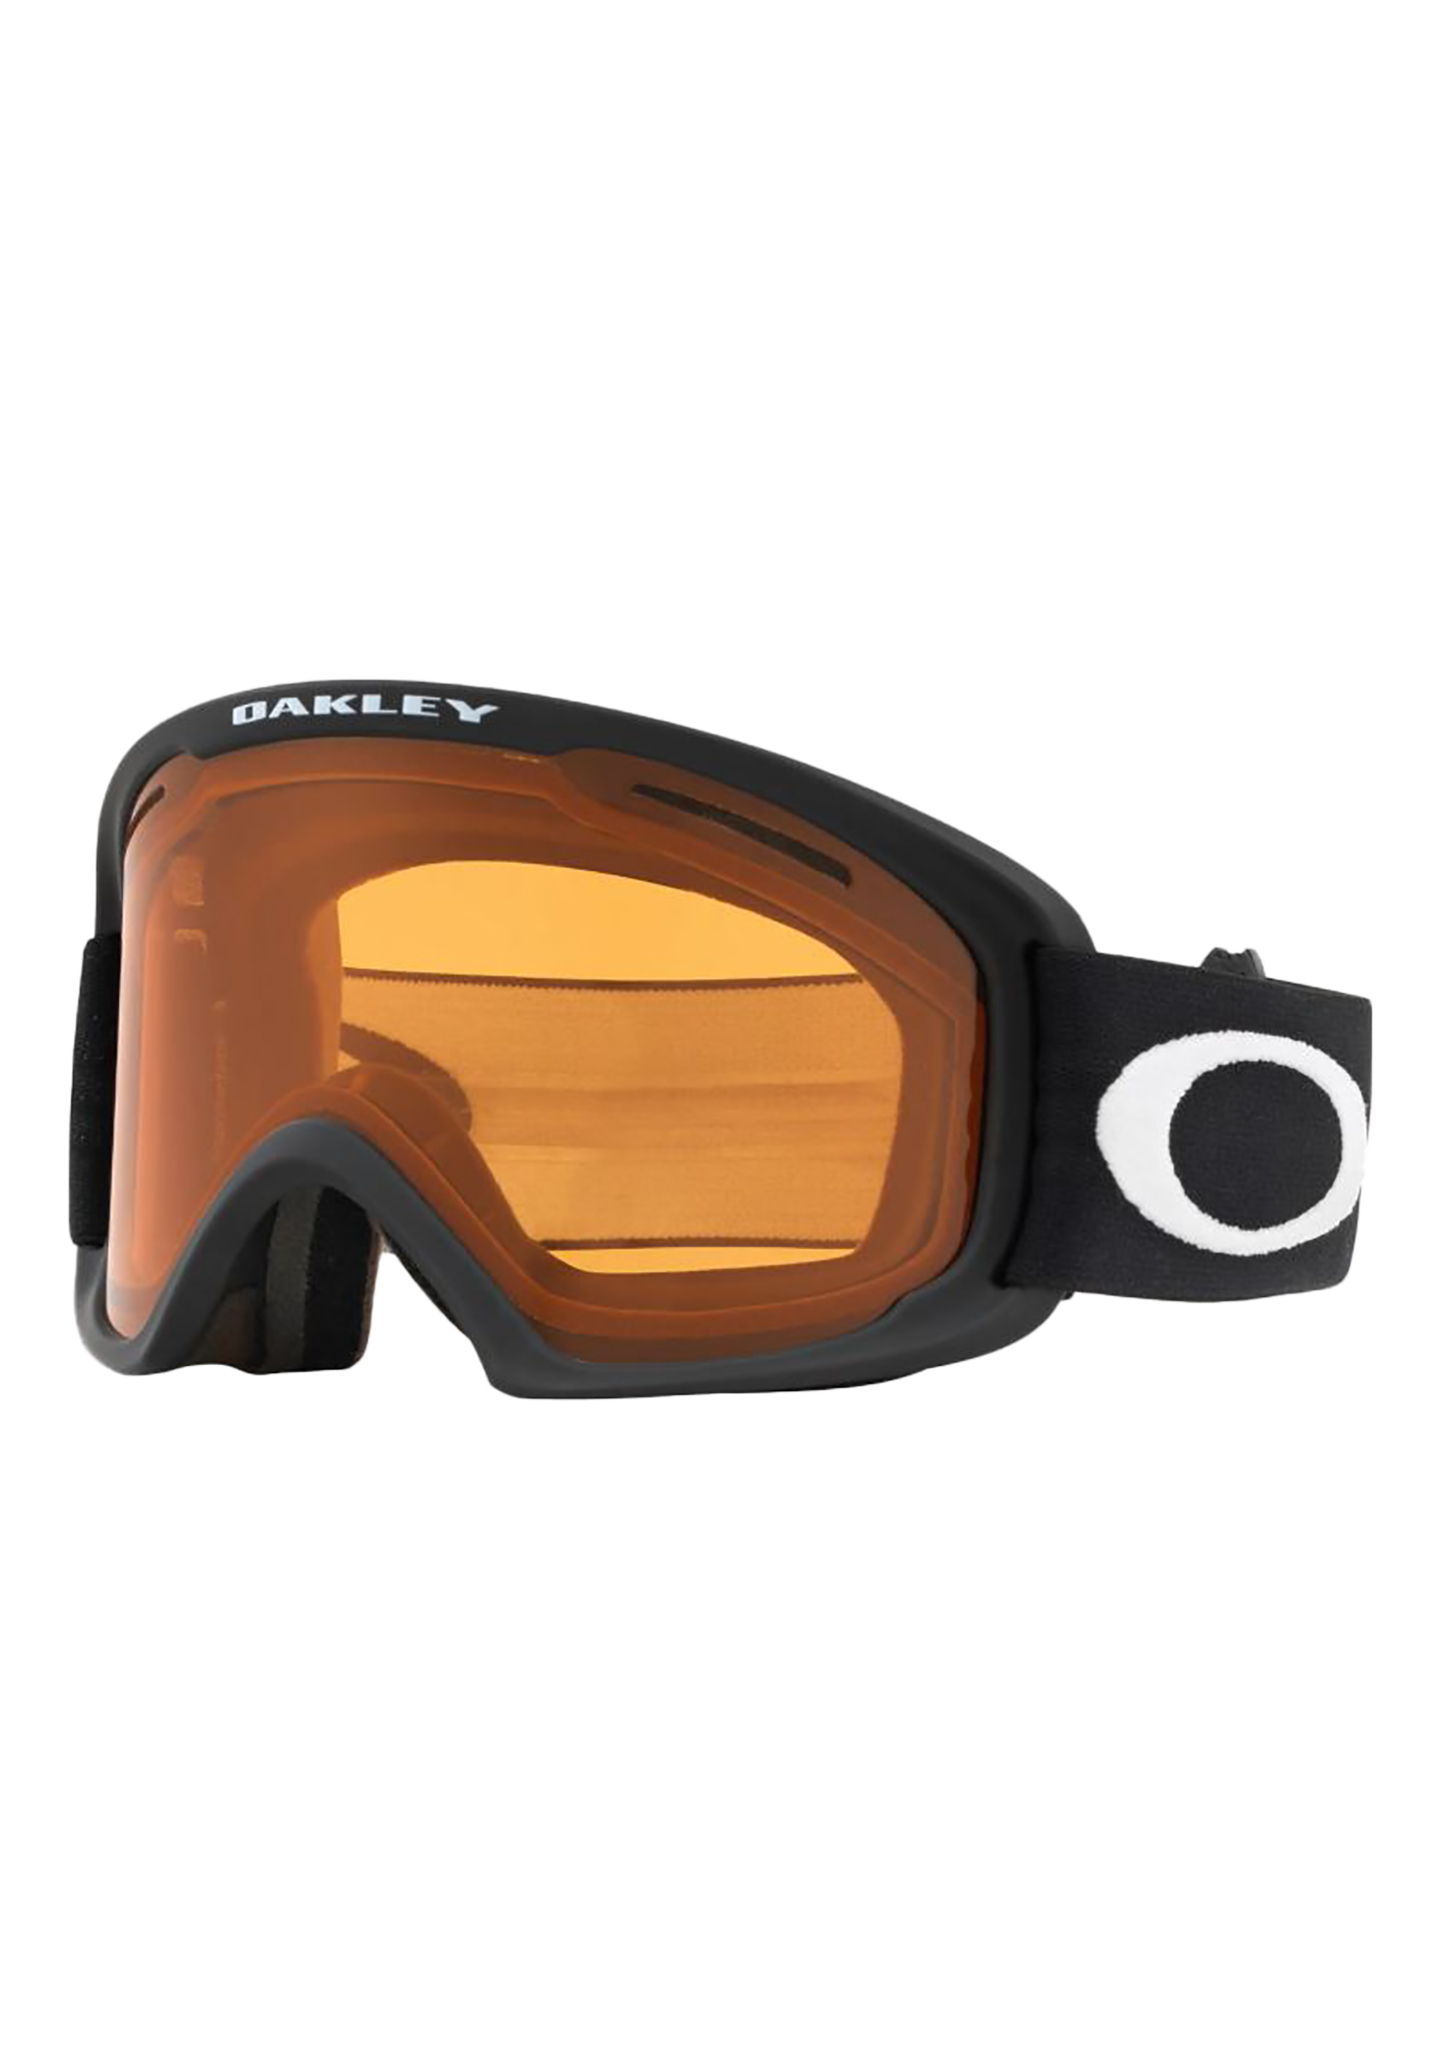 Oakley O Frame 2.0 Pro L Snowboardbrillen mattschwarz/persimone One Size